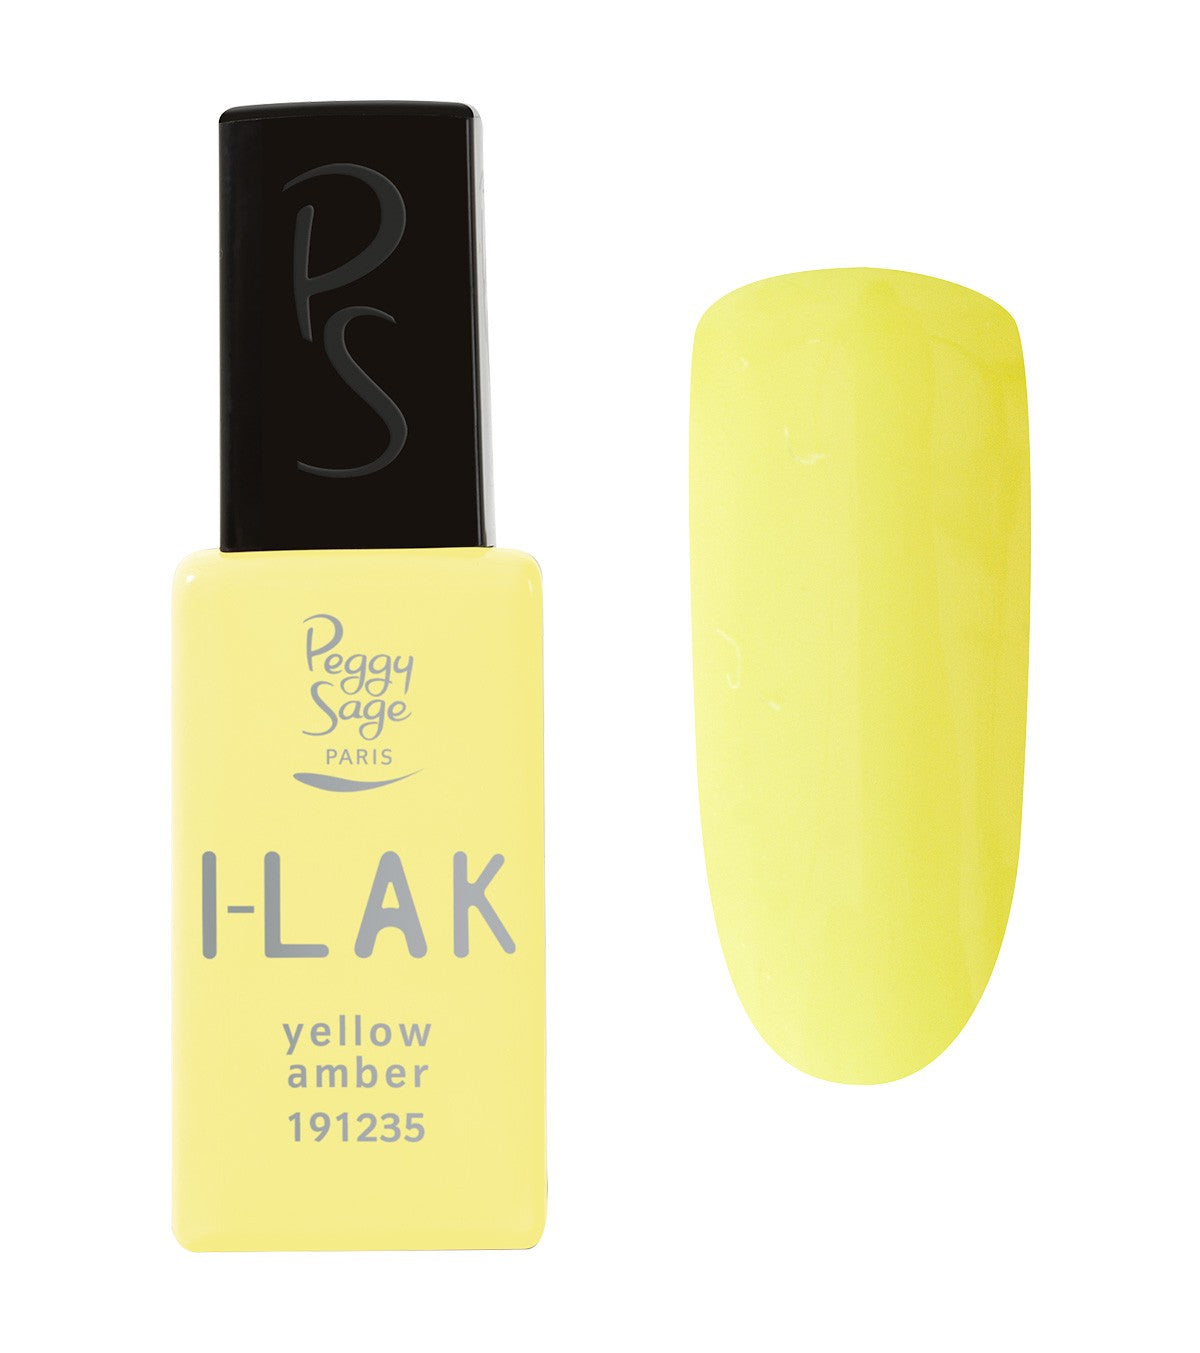 I-LAK Yellow Amber Ref 191235